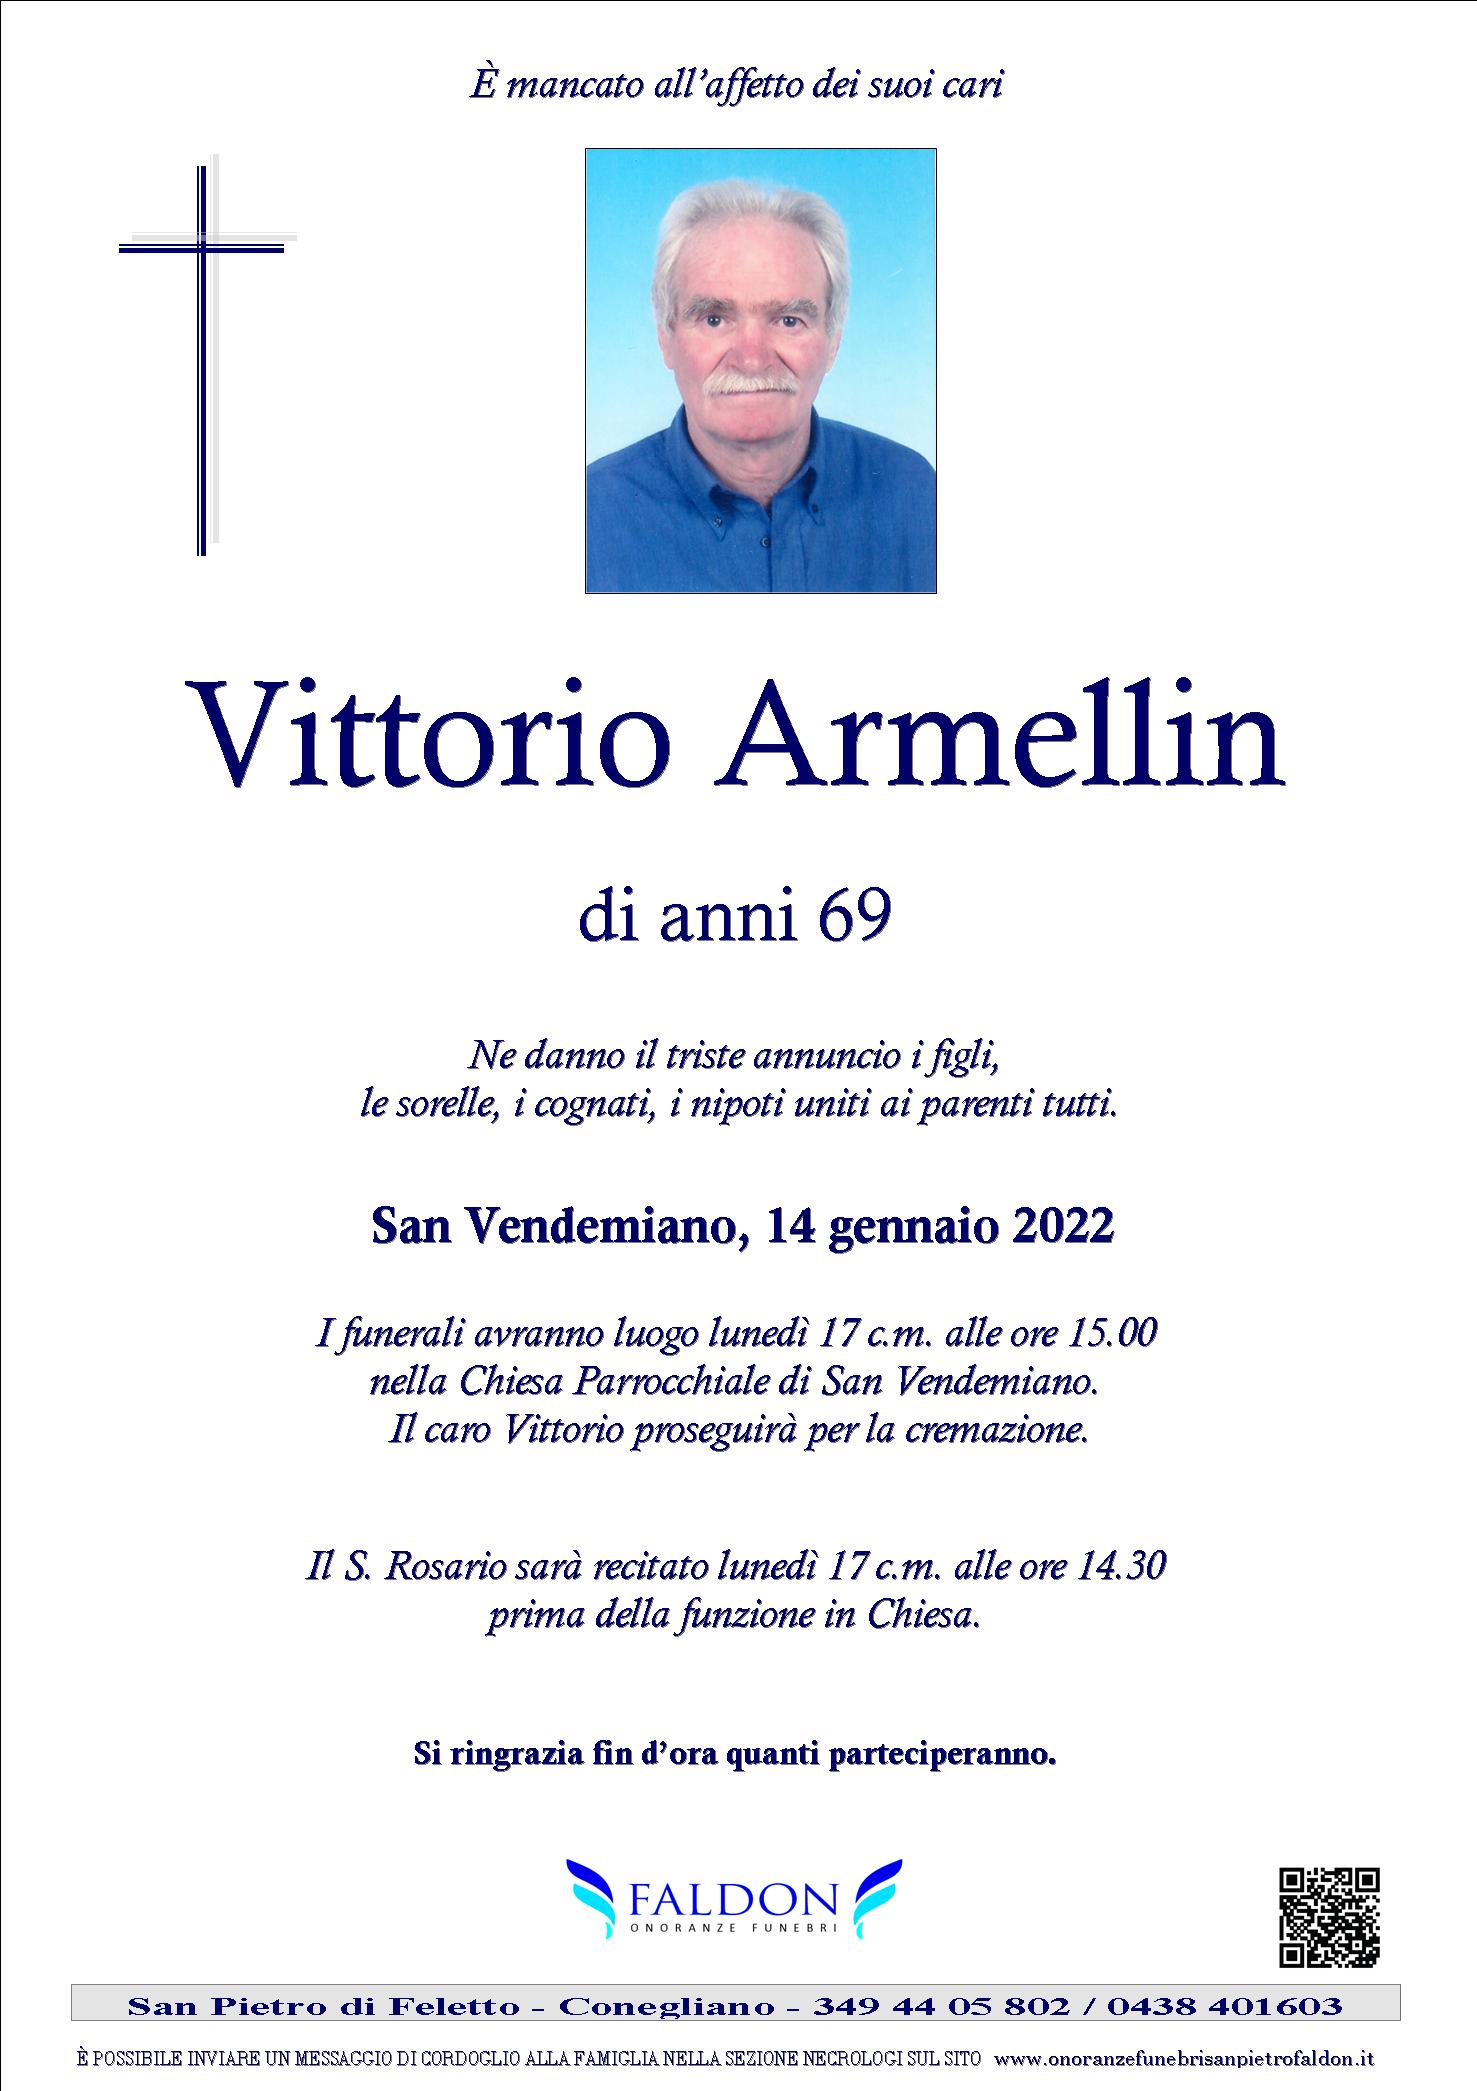 Vittorio Armellin